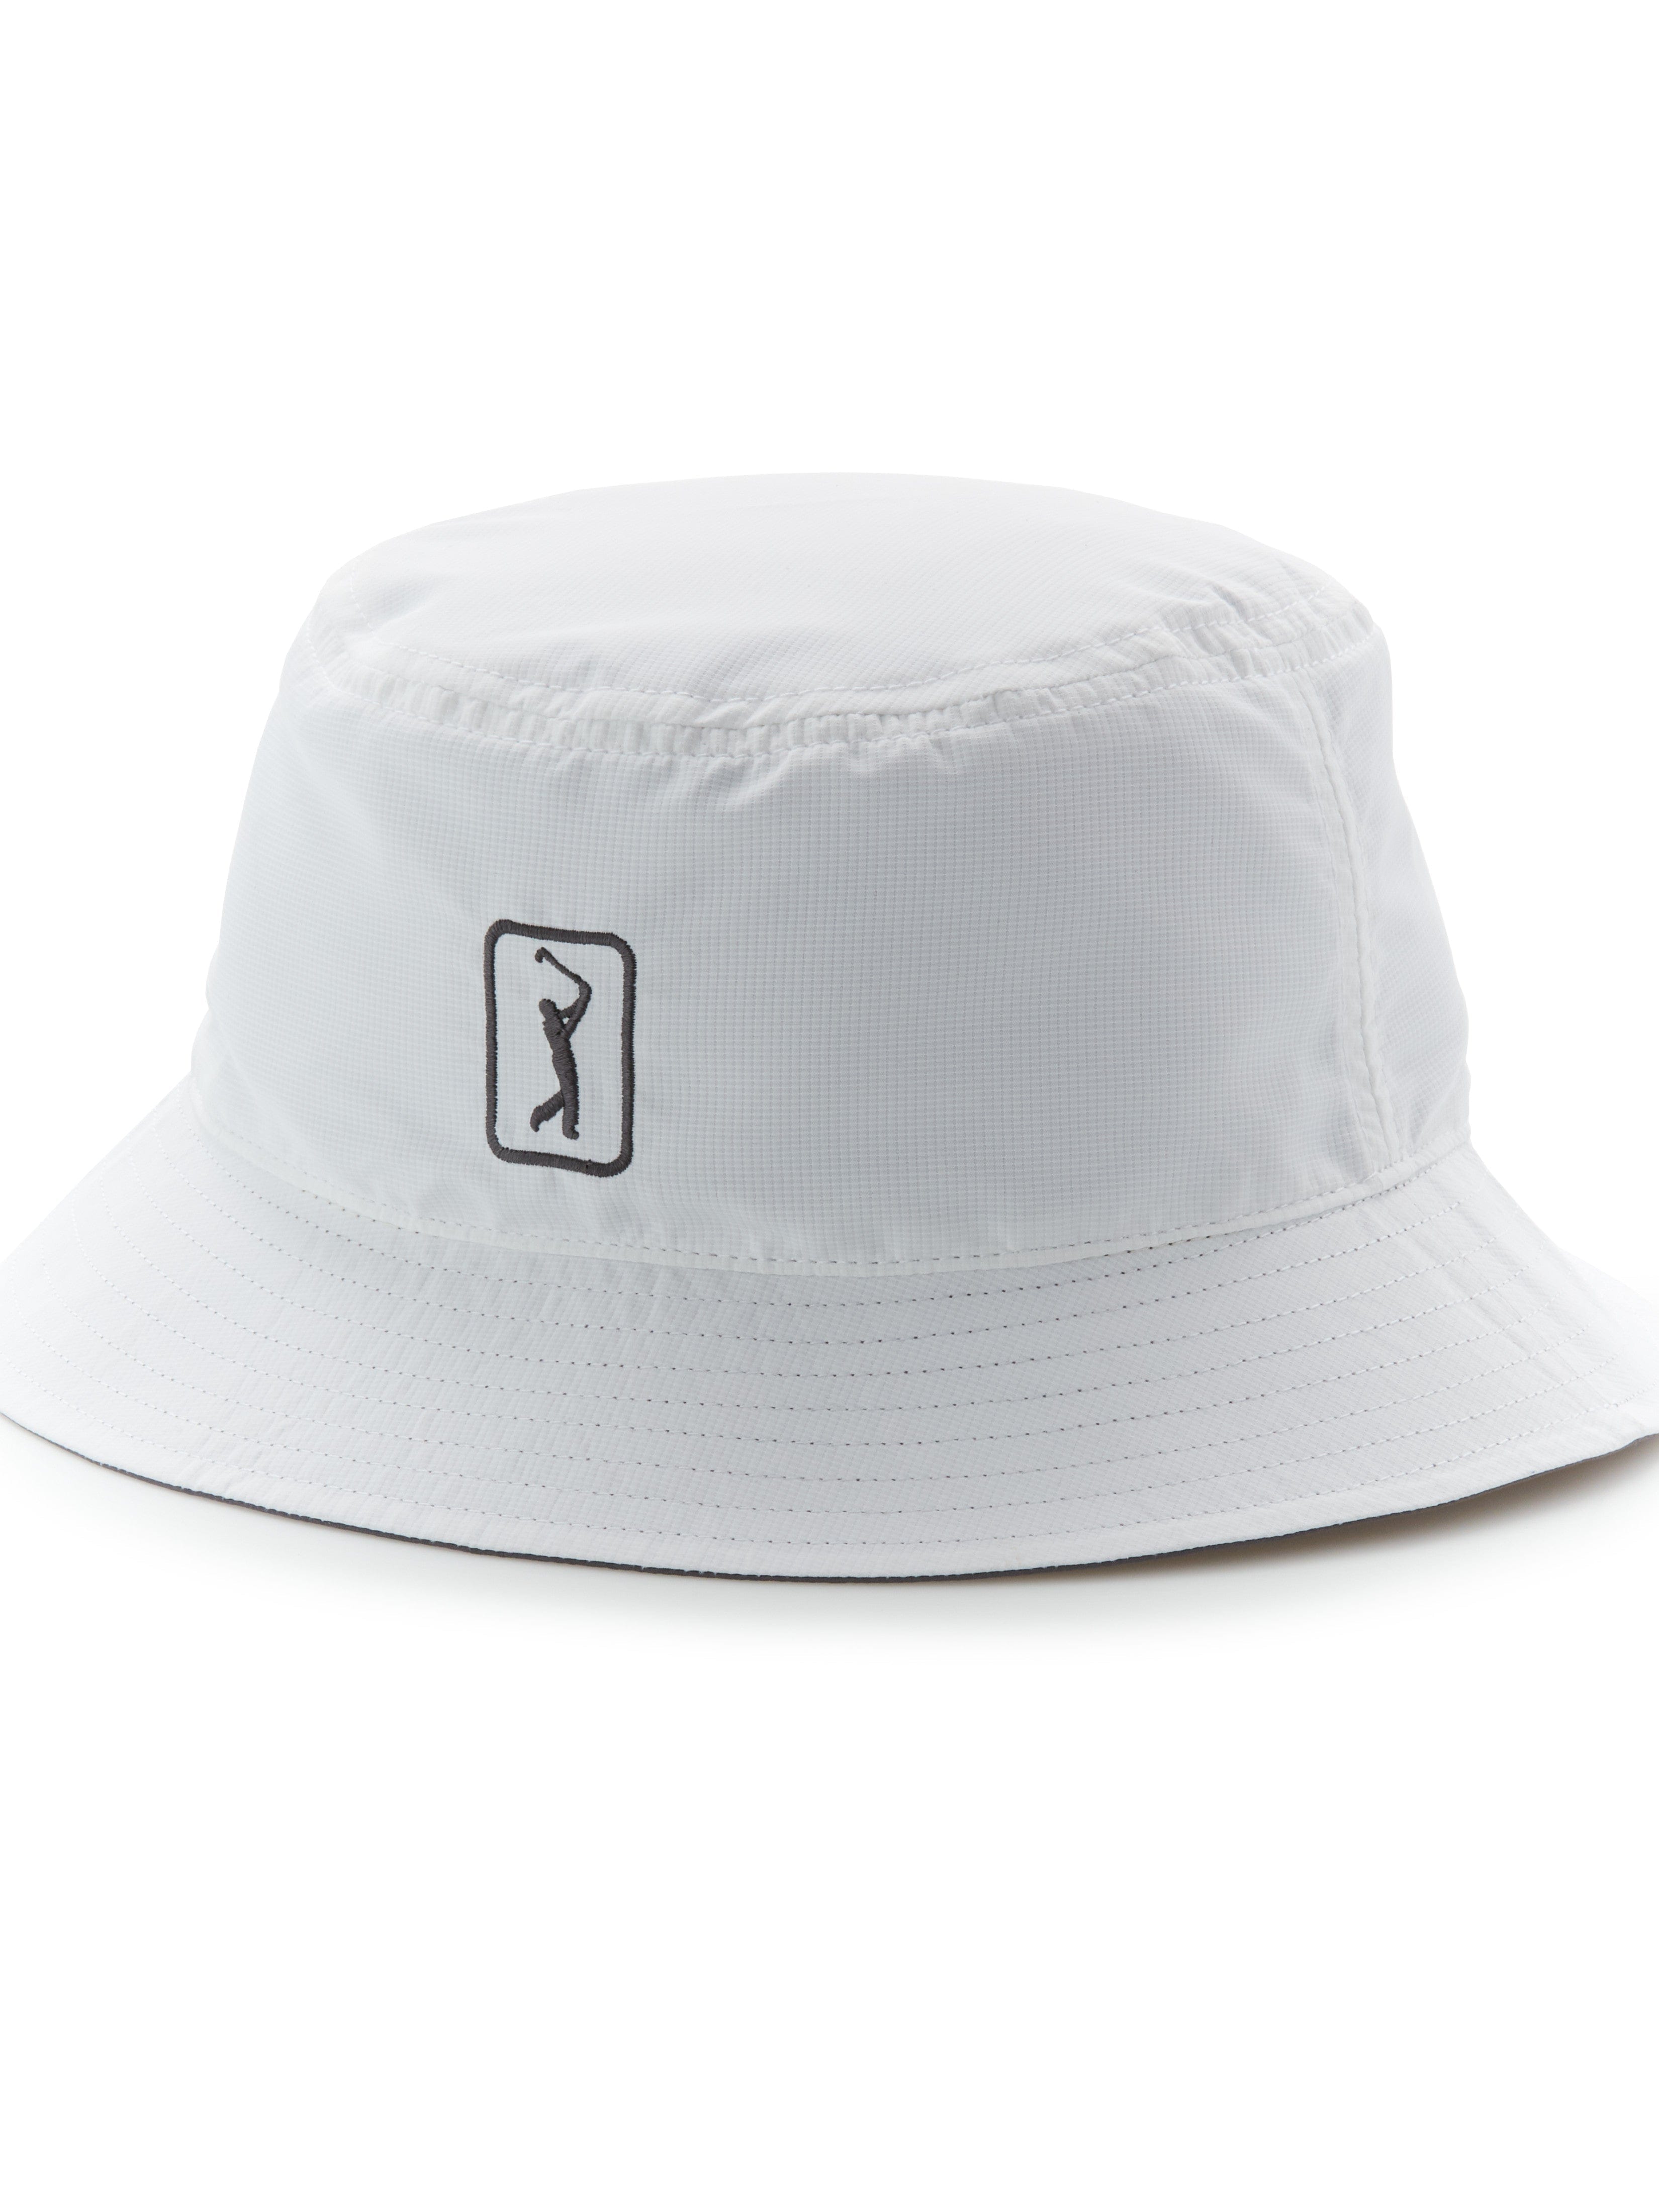 PGA TOUR Apparel Reversible Golf Bucket Hat, White, 100% Polyester | Golf Apparel Shop